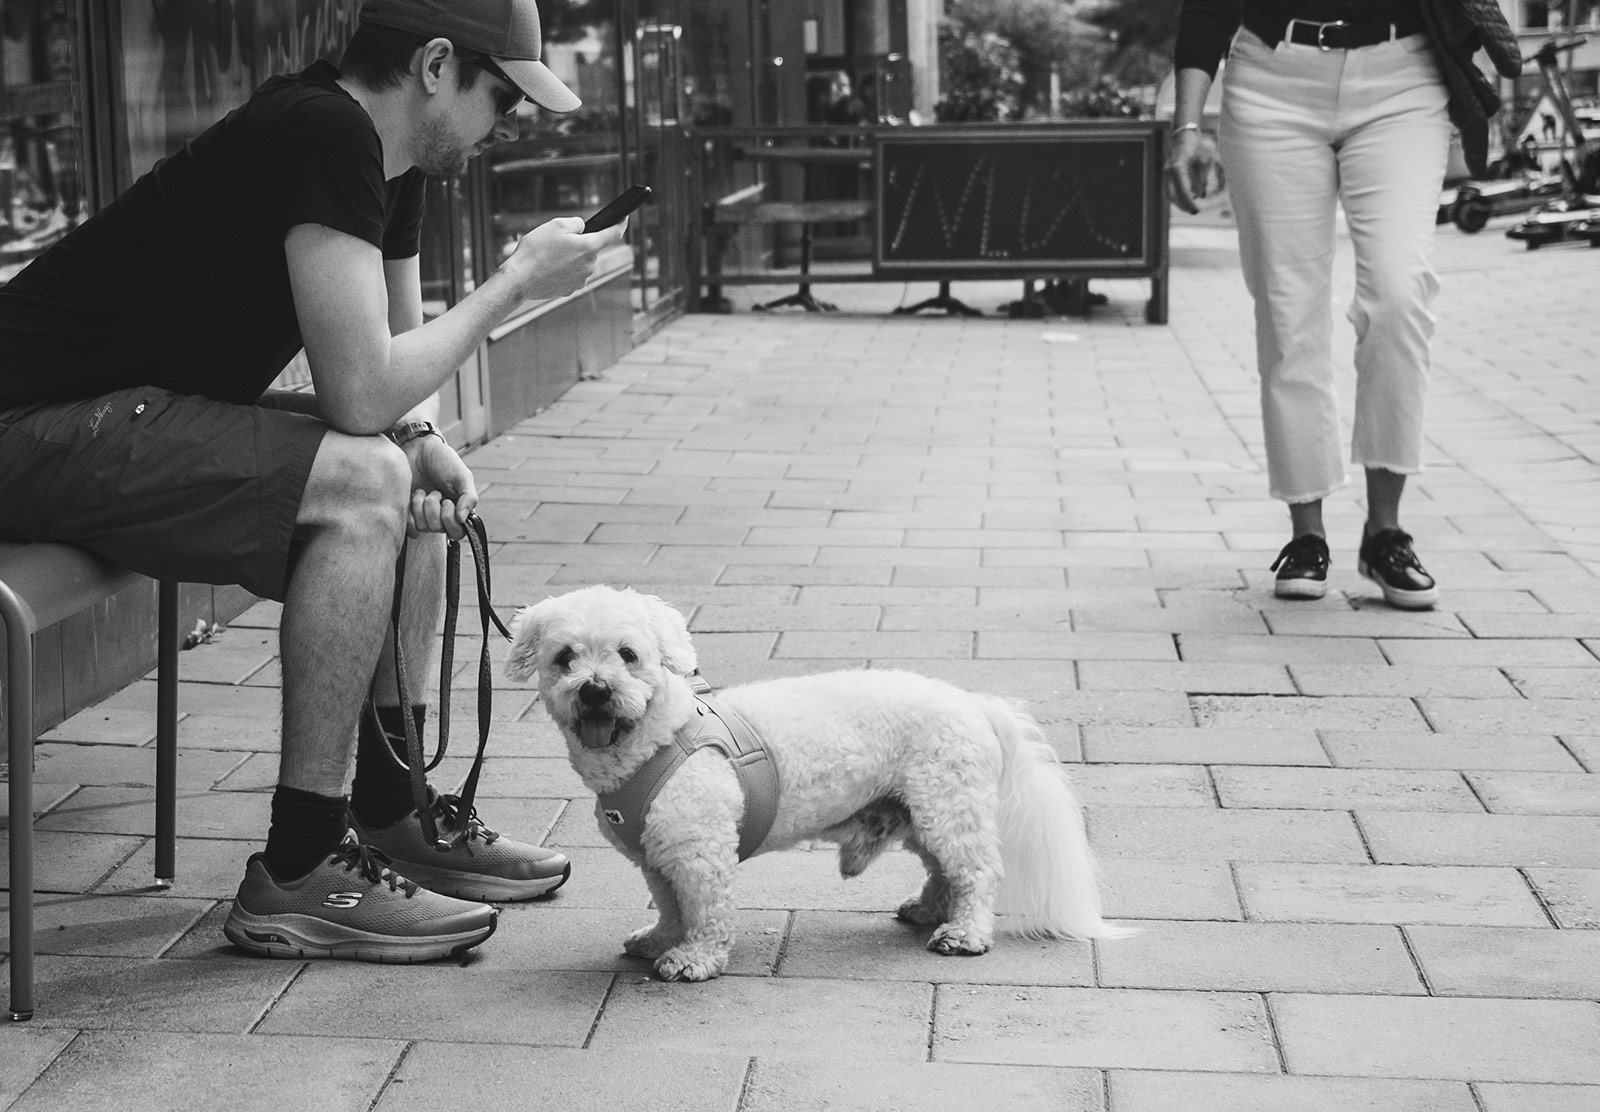 Fluffy dog stood next to owner